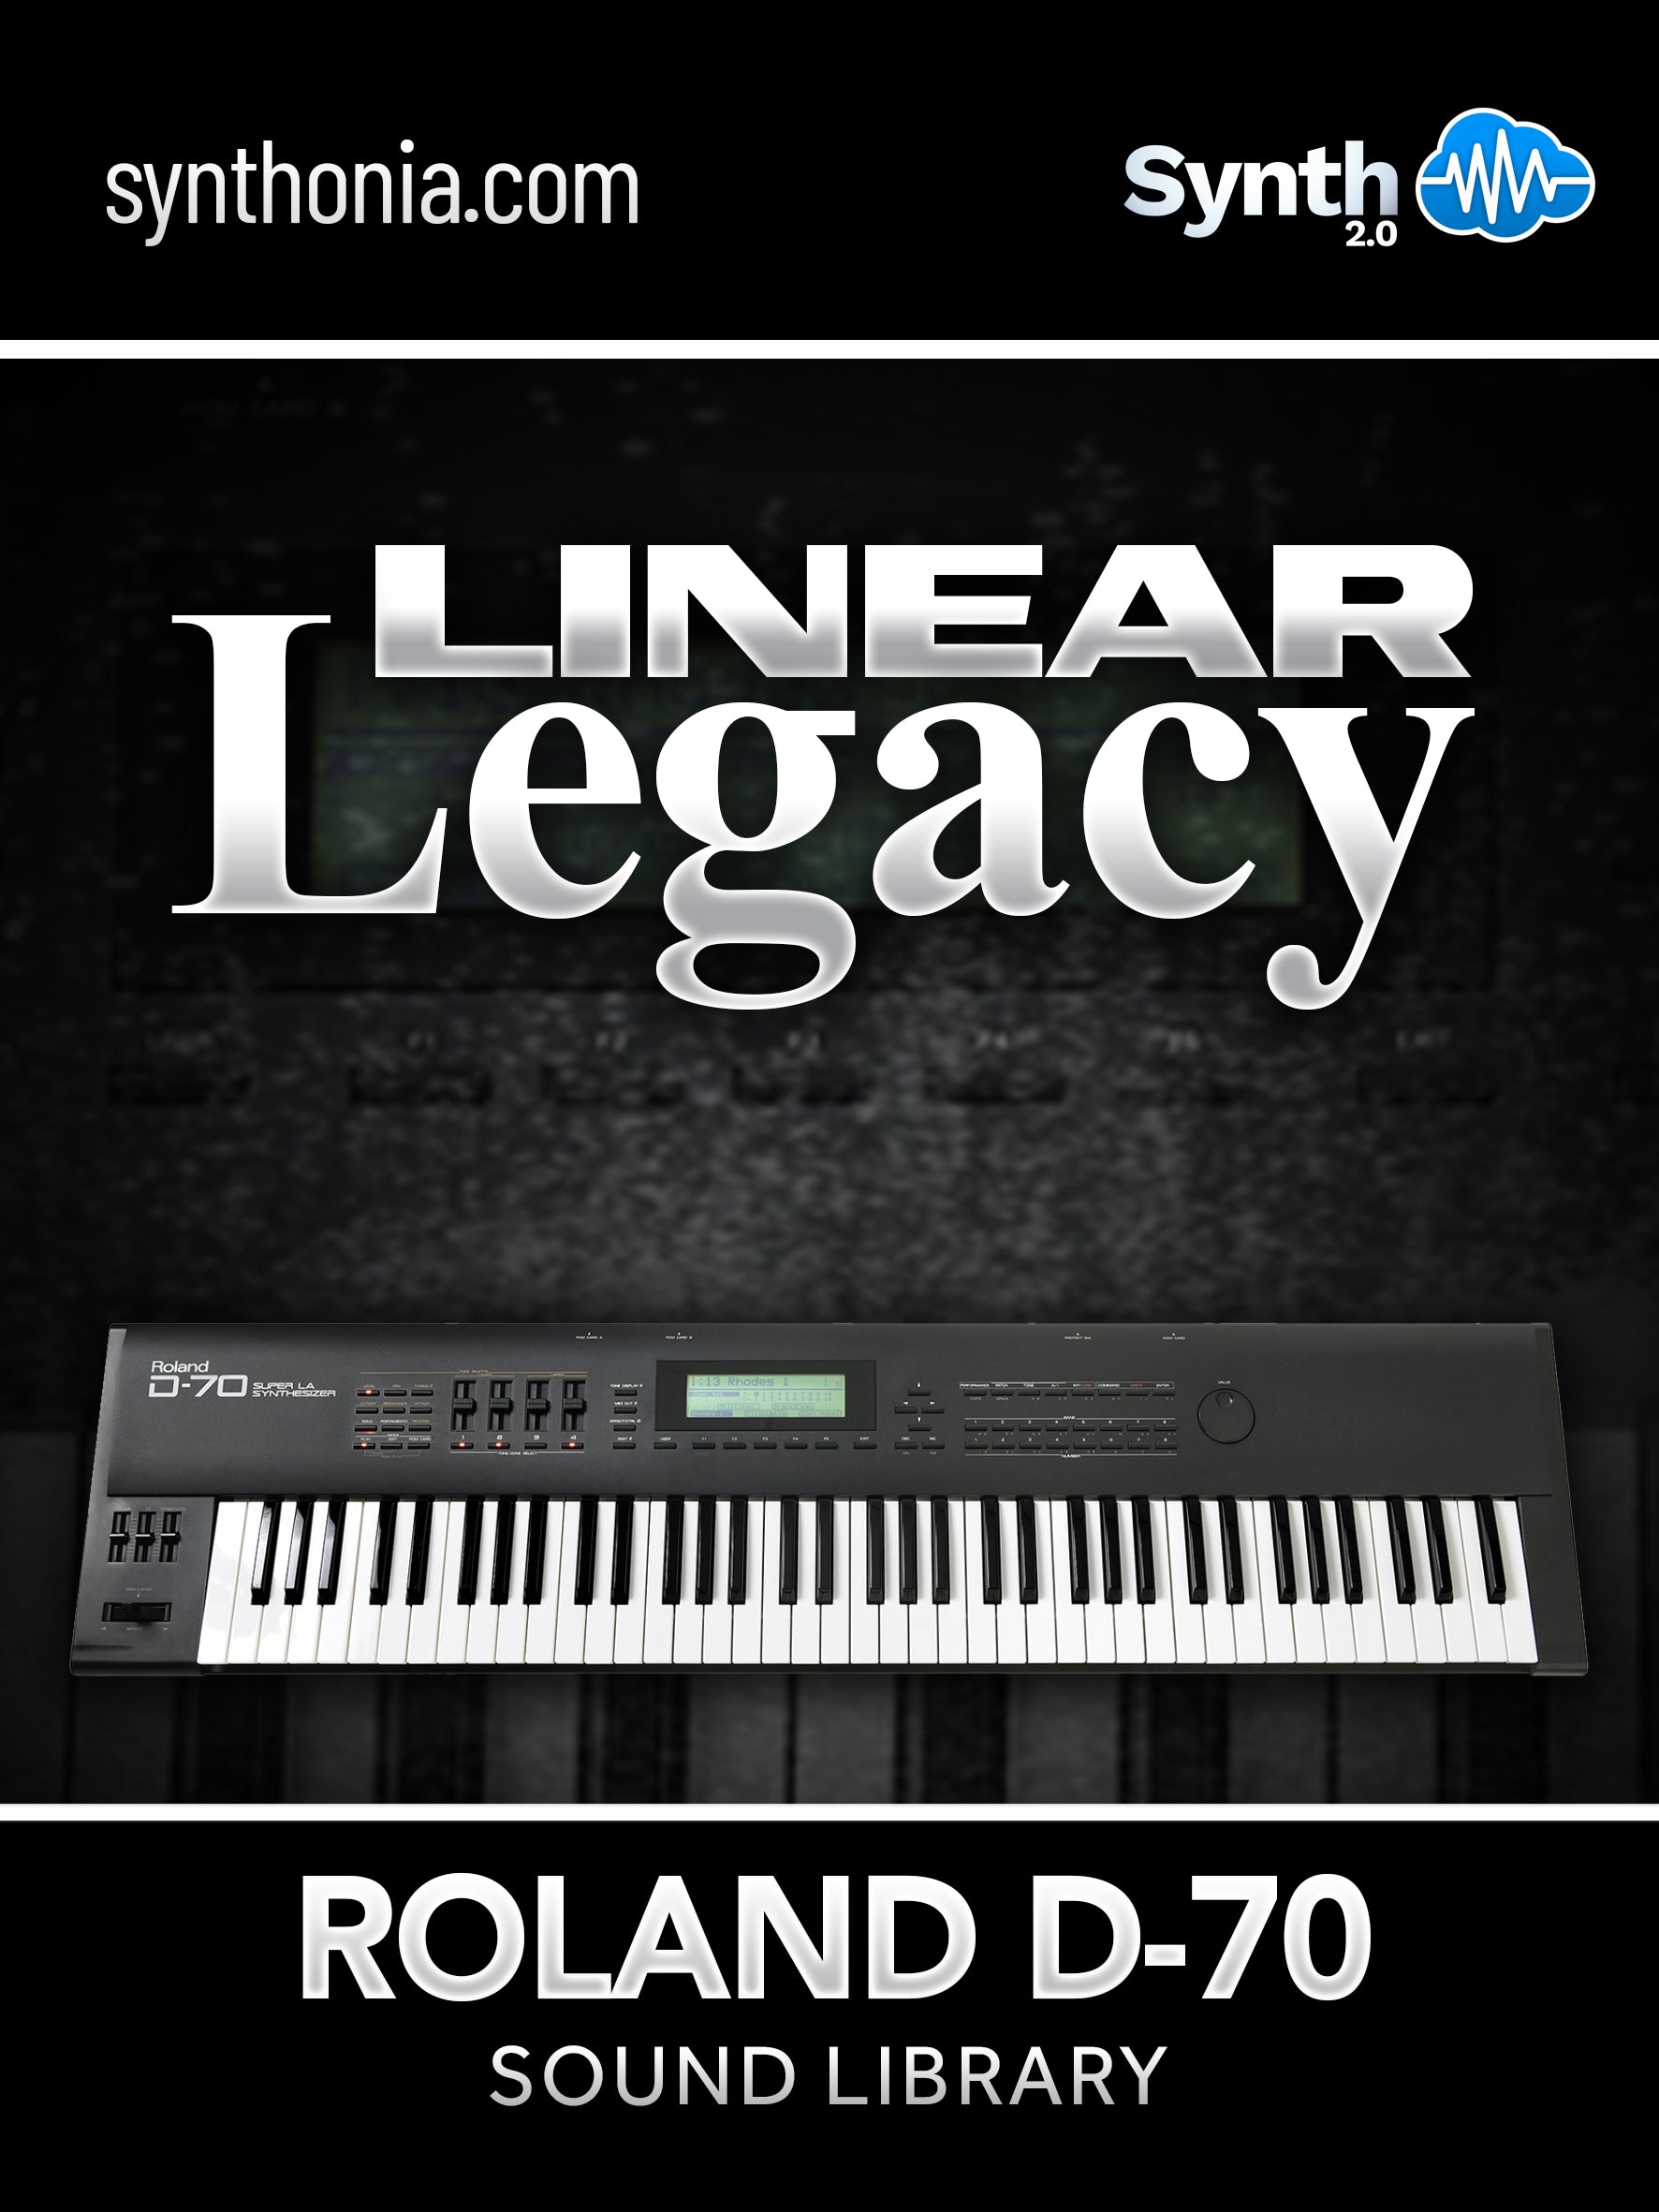 LFO160 - Linear Legacy - D-70 ( 64 presets )